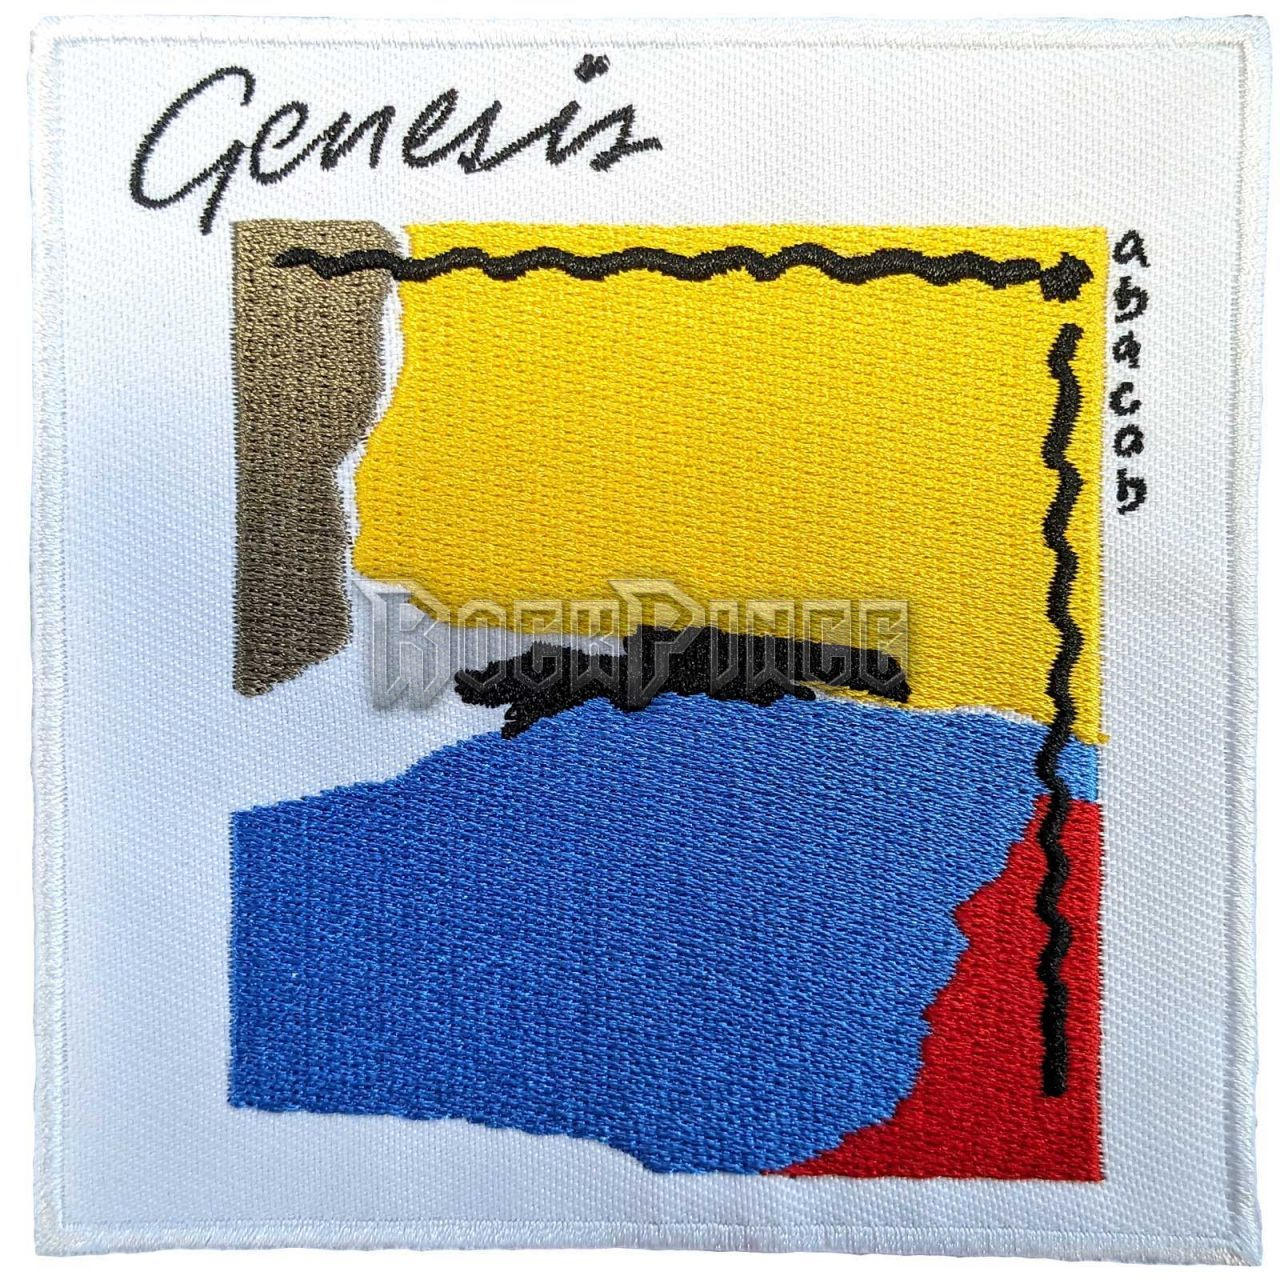 Genesis - Abacab Album Cover - kisfelvarró - GENPAT02